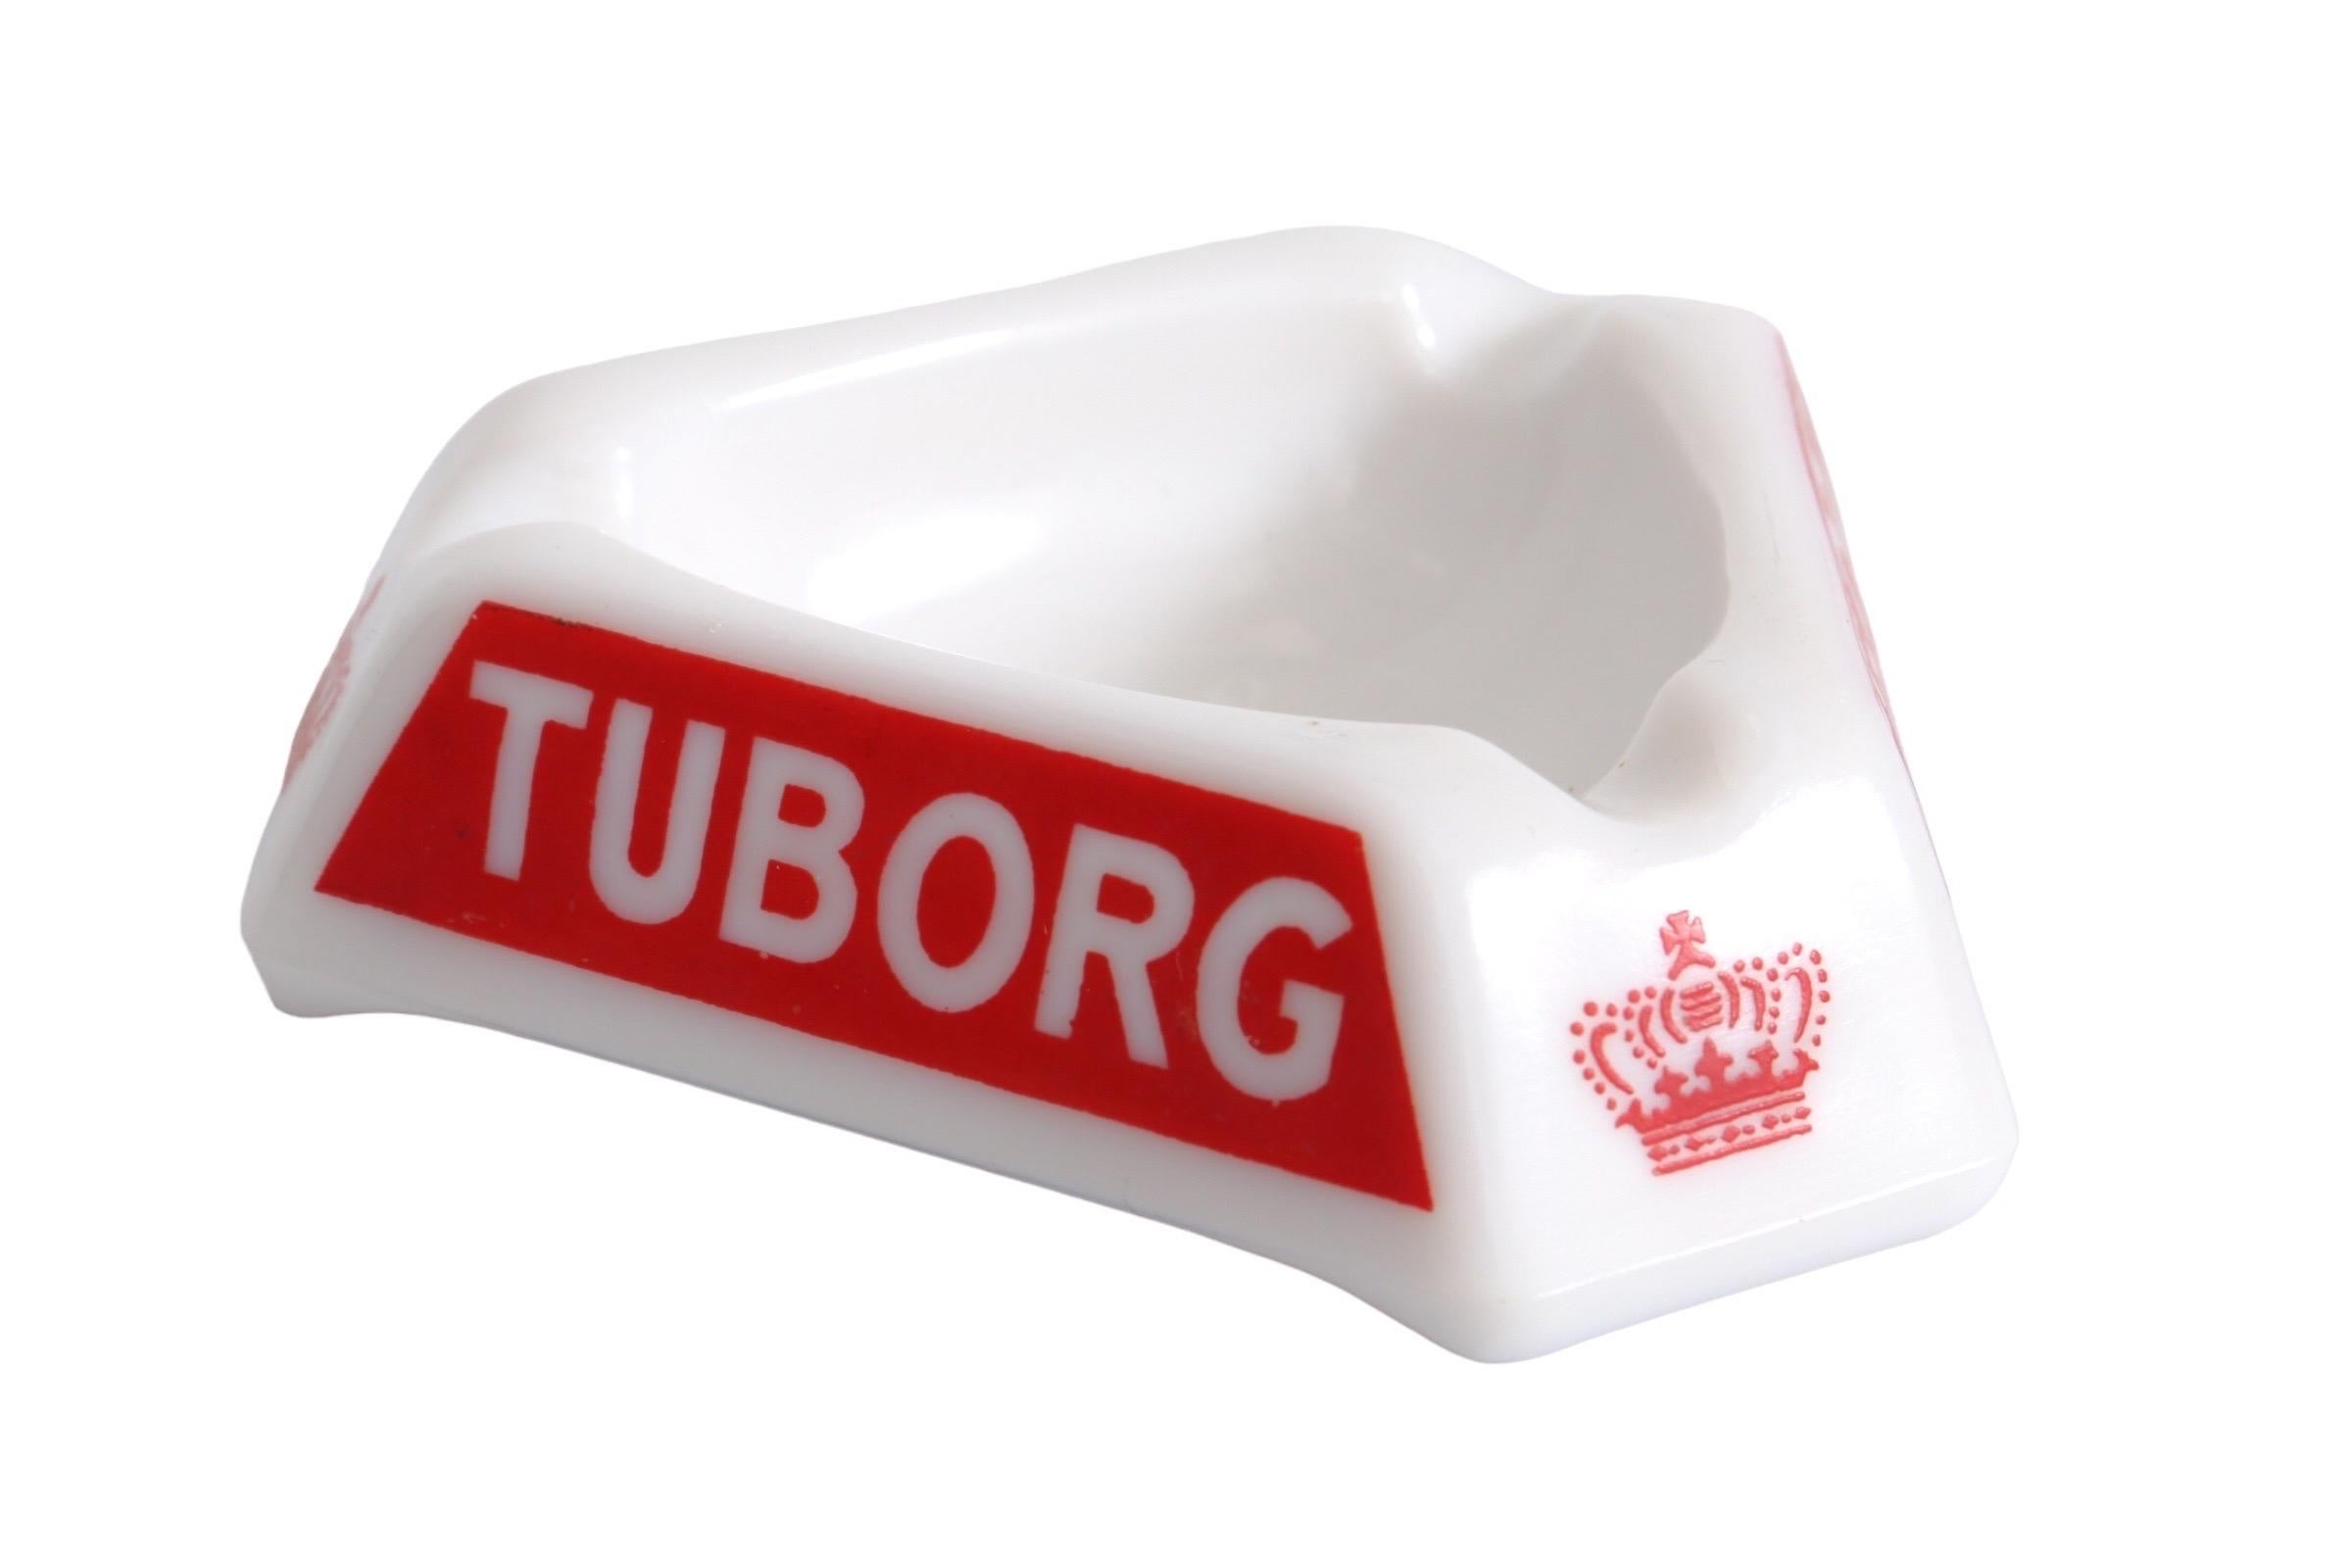 Tuborg French Opalex Ashtray In Good Condition For Sale In Bradenton, FL